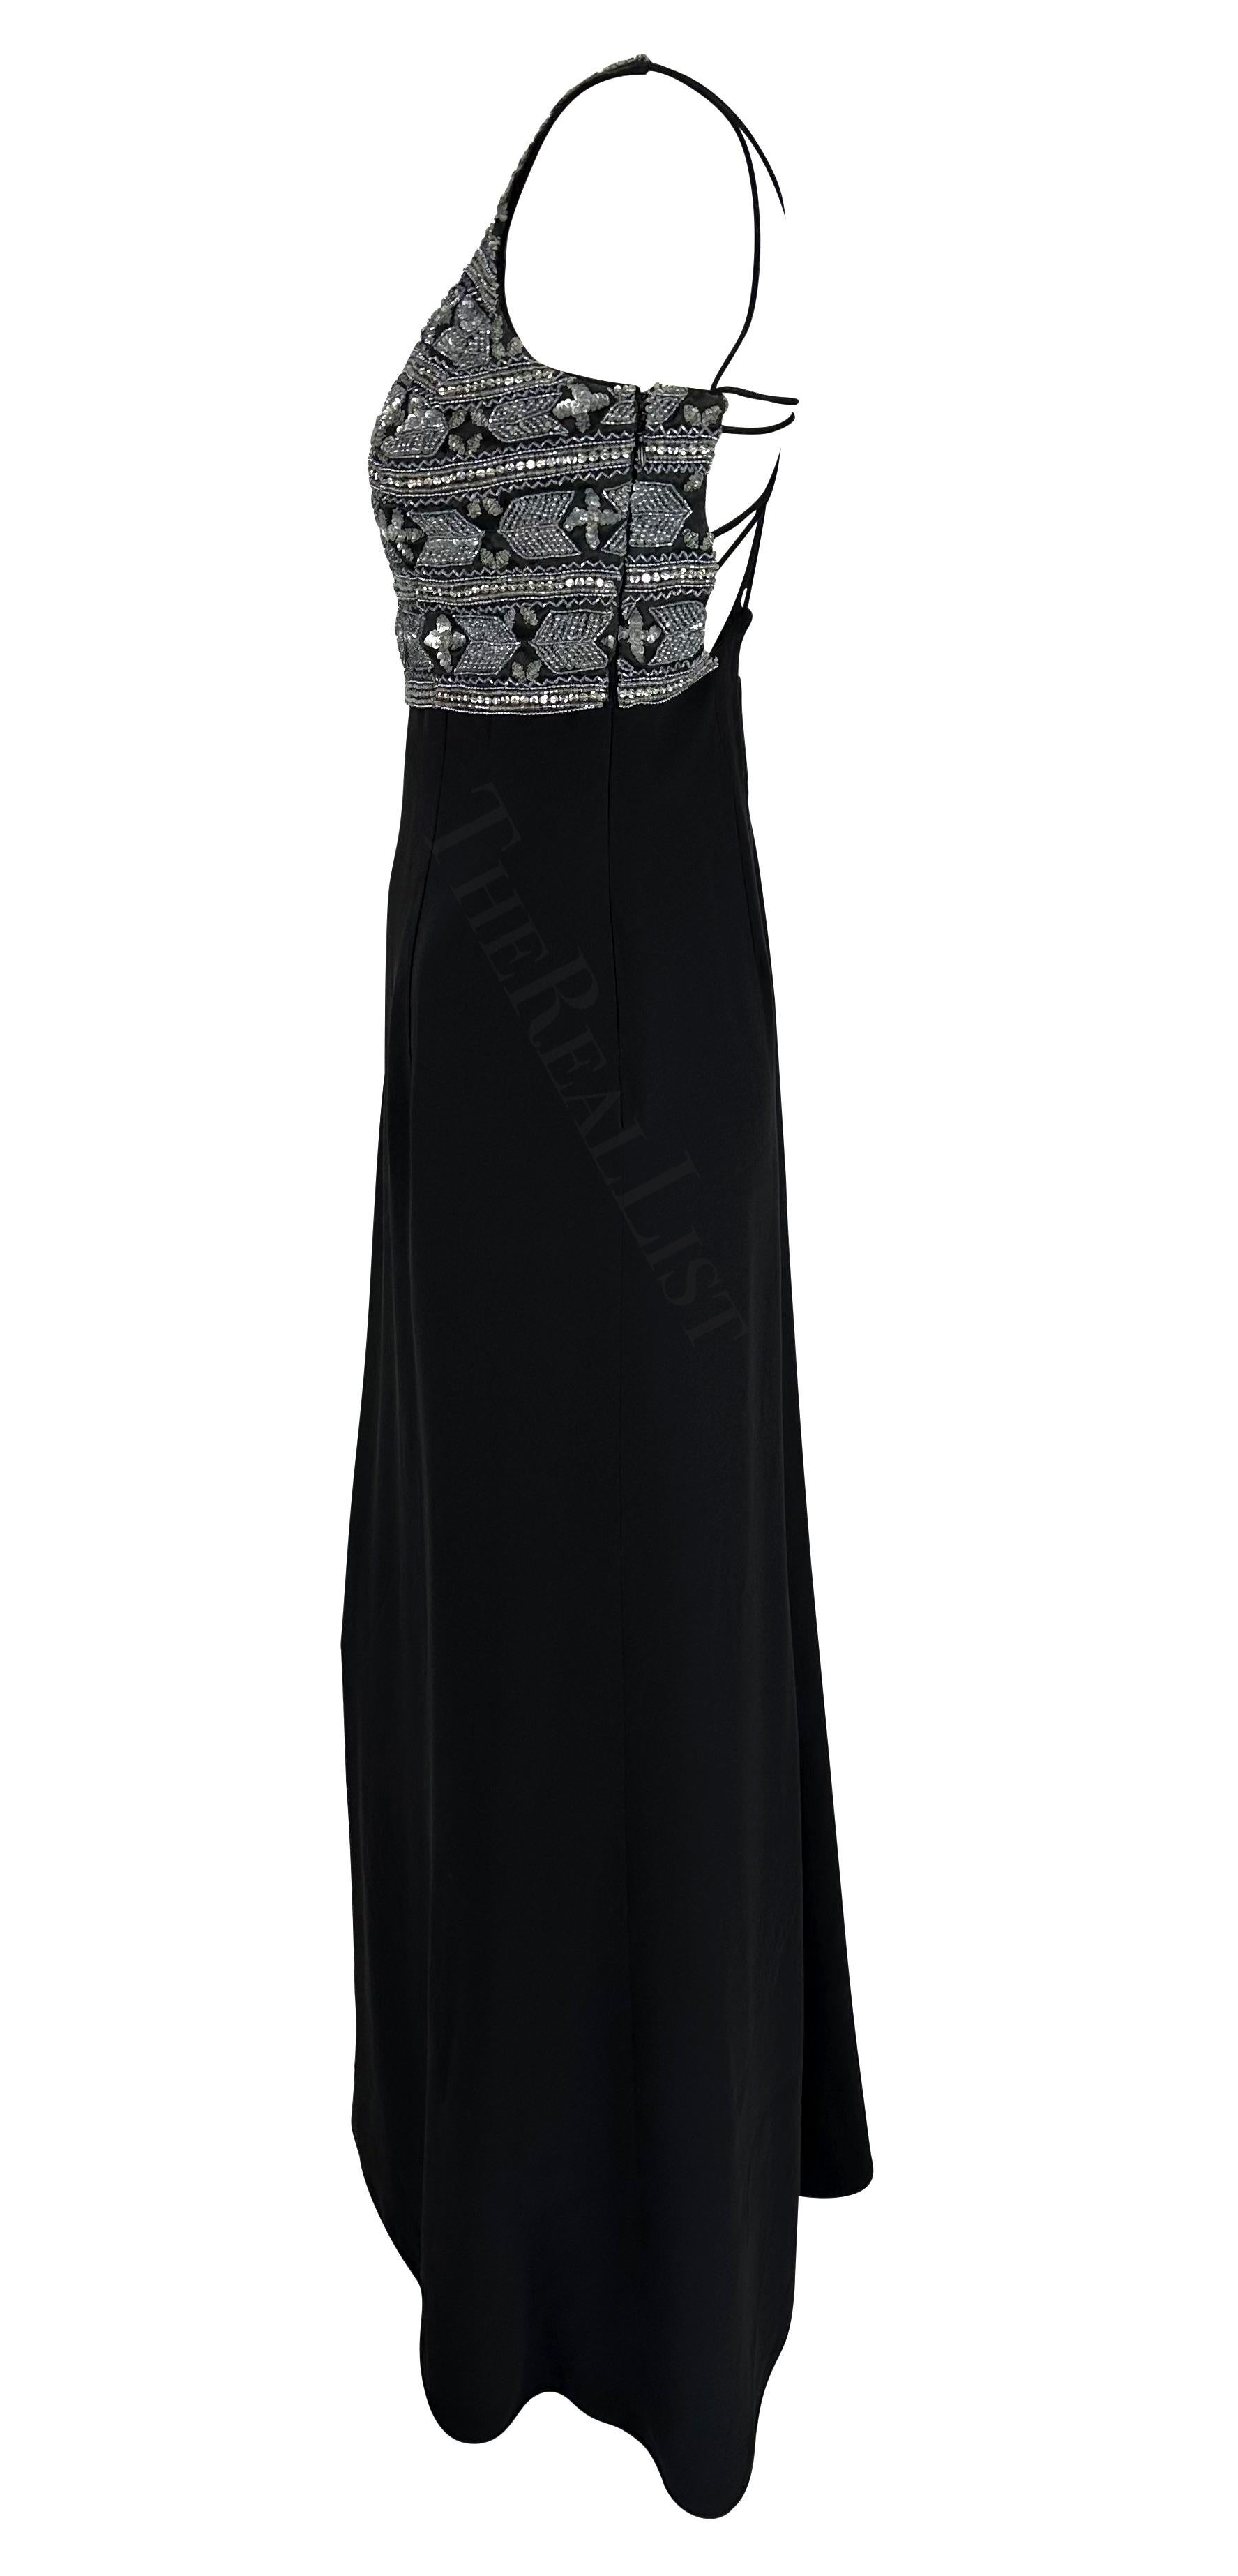 S/S 1996 Giorgio Armani Backless Black Silver Beaded Dress For Sale 3